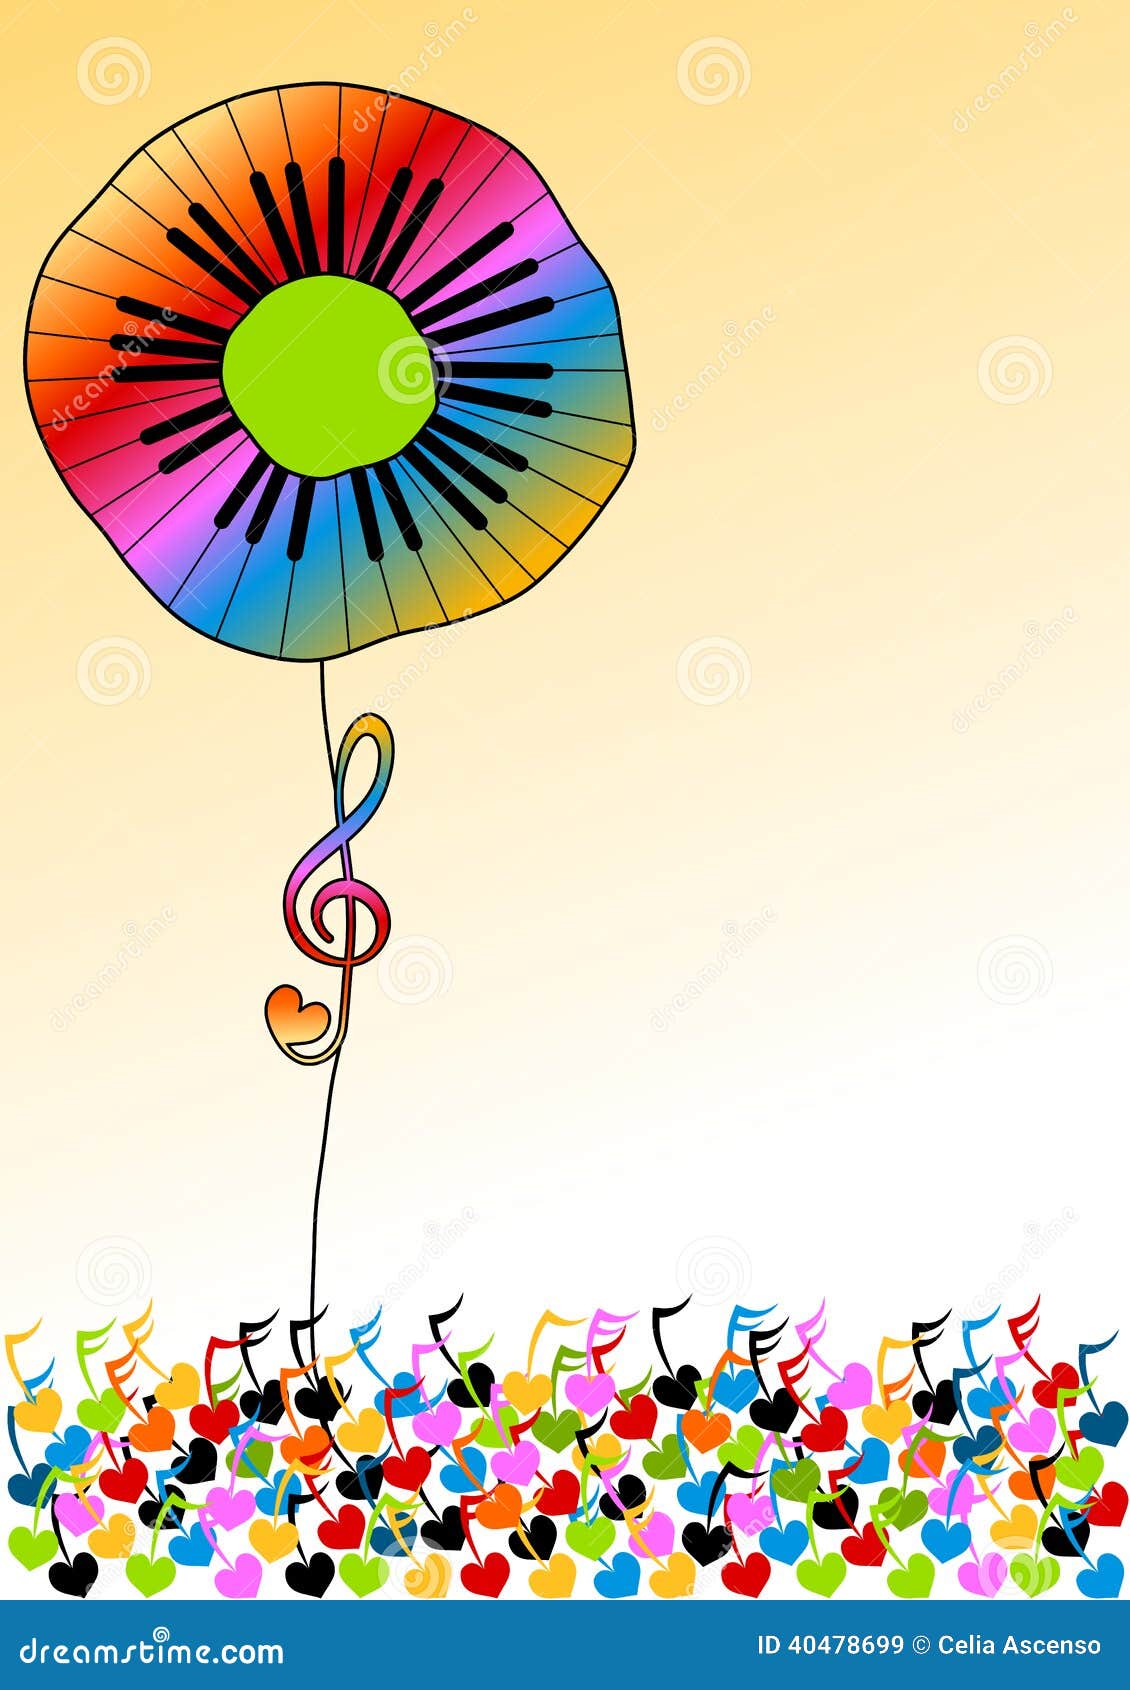 piano-keys-rainbow-flower-keyboard-planted-music-notes-field-40478699.jpg